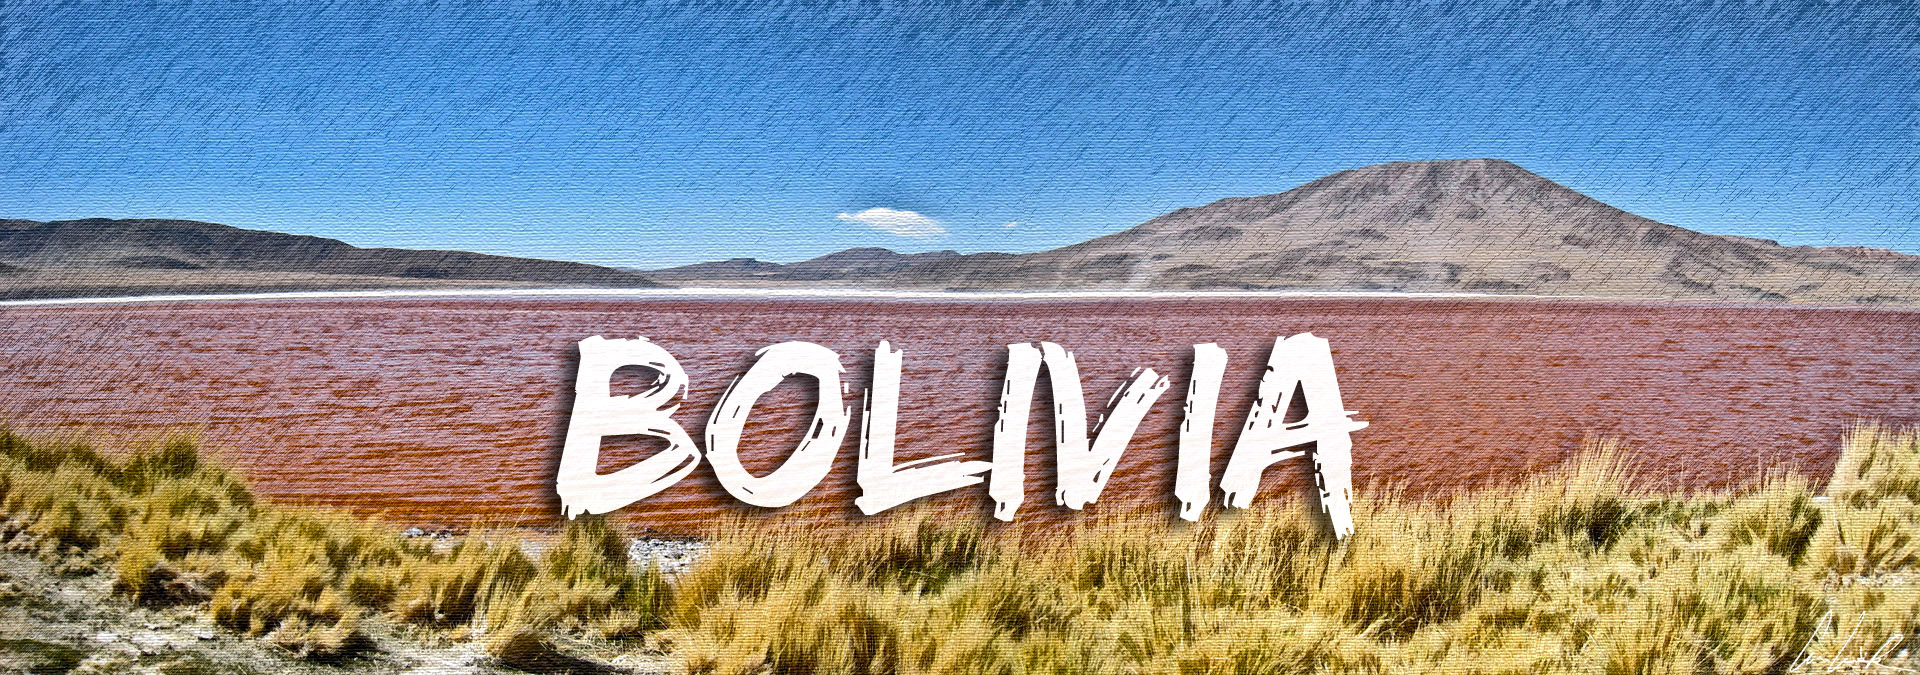 C-Ludik - Region visited: Bolivia